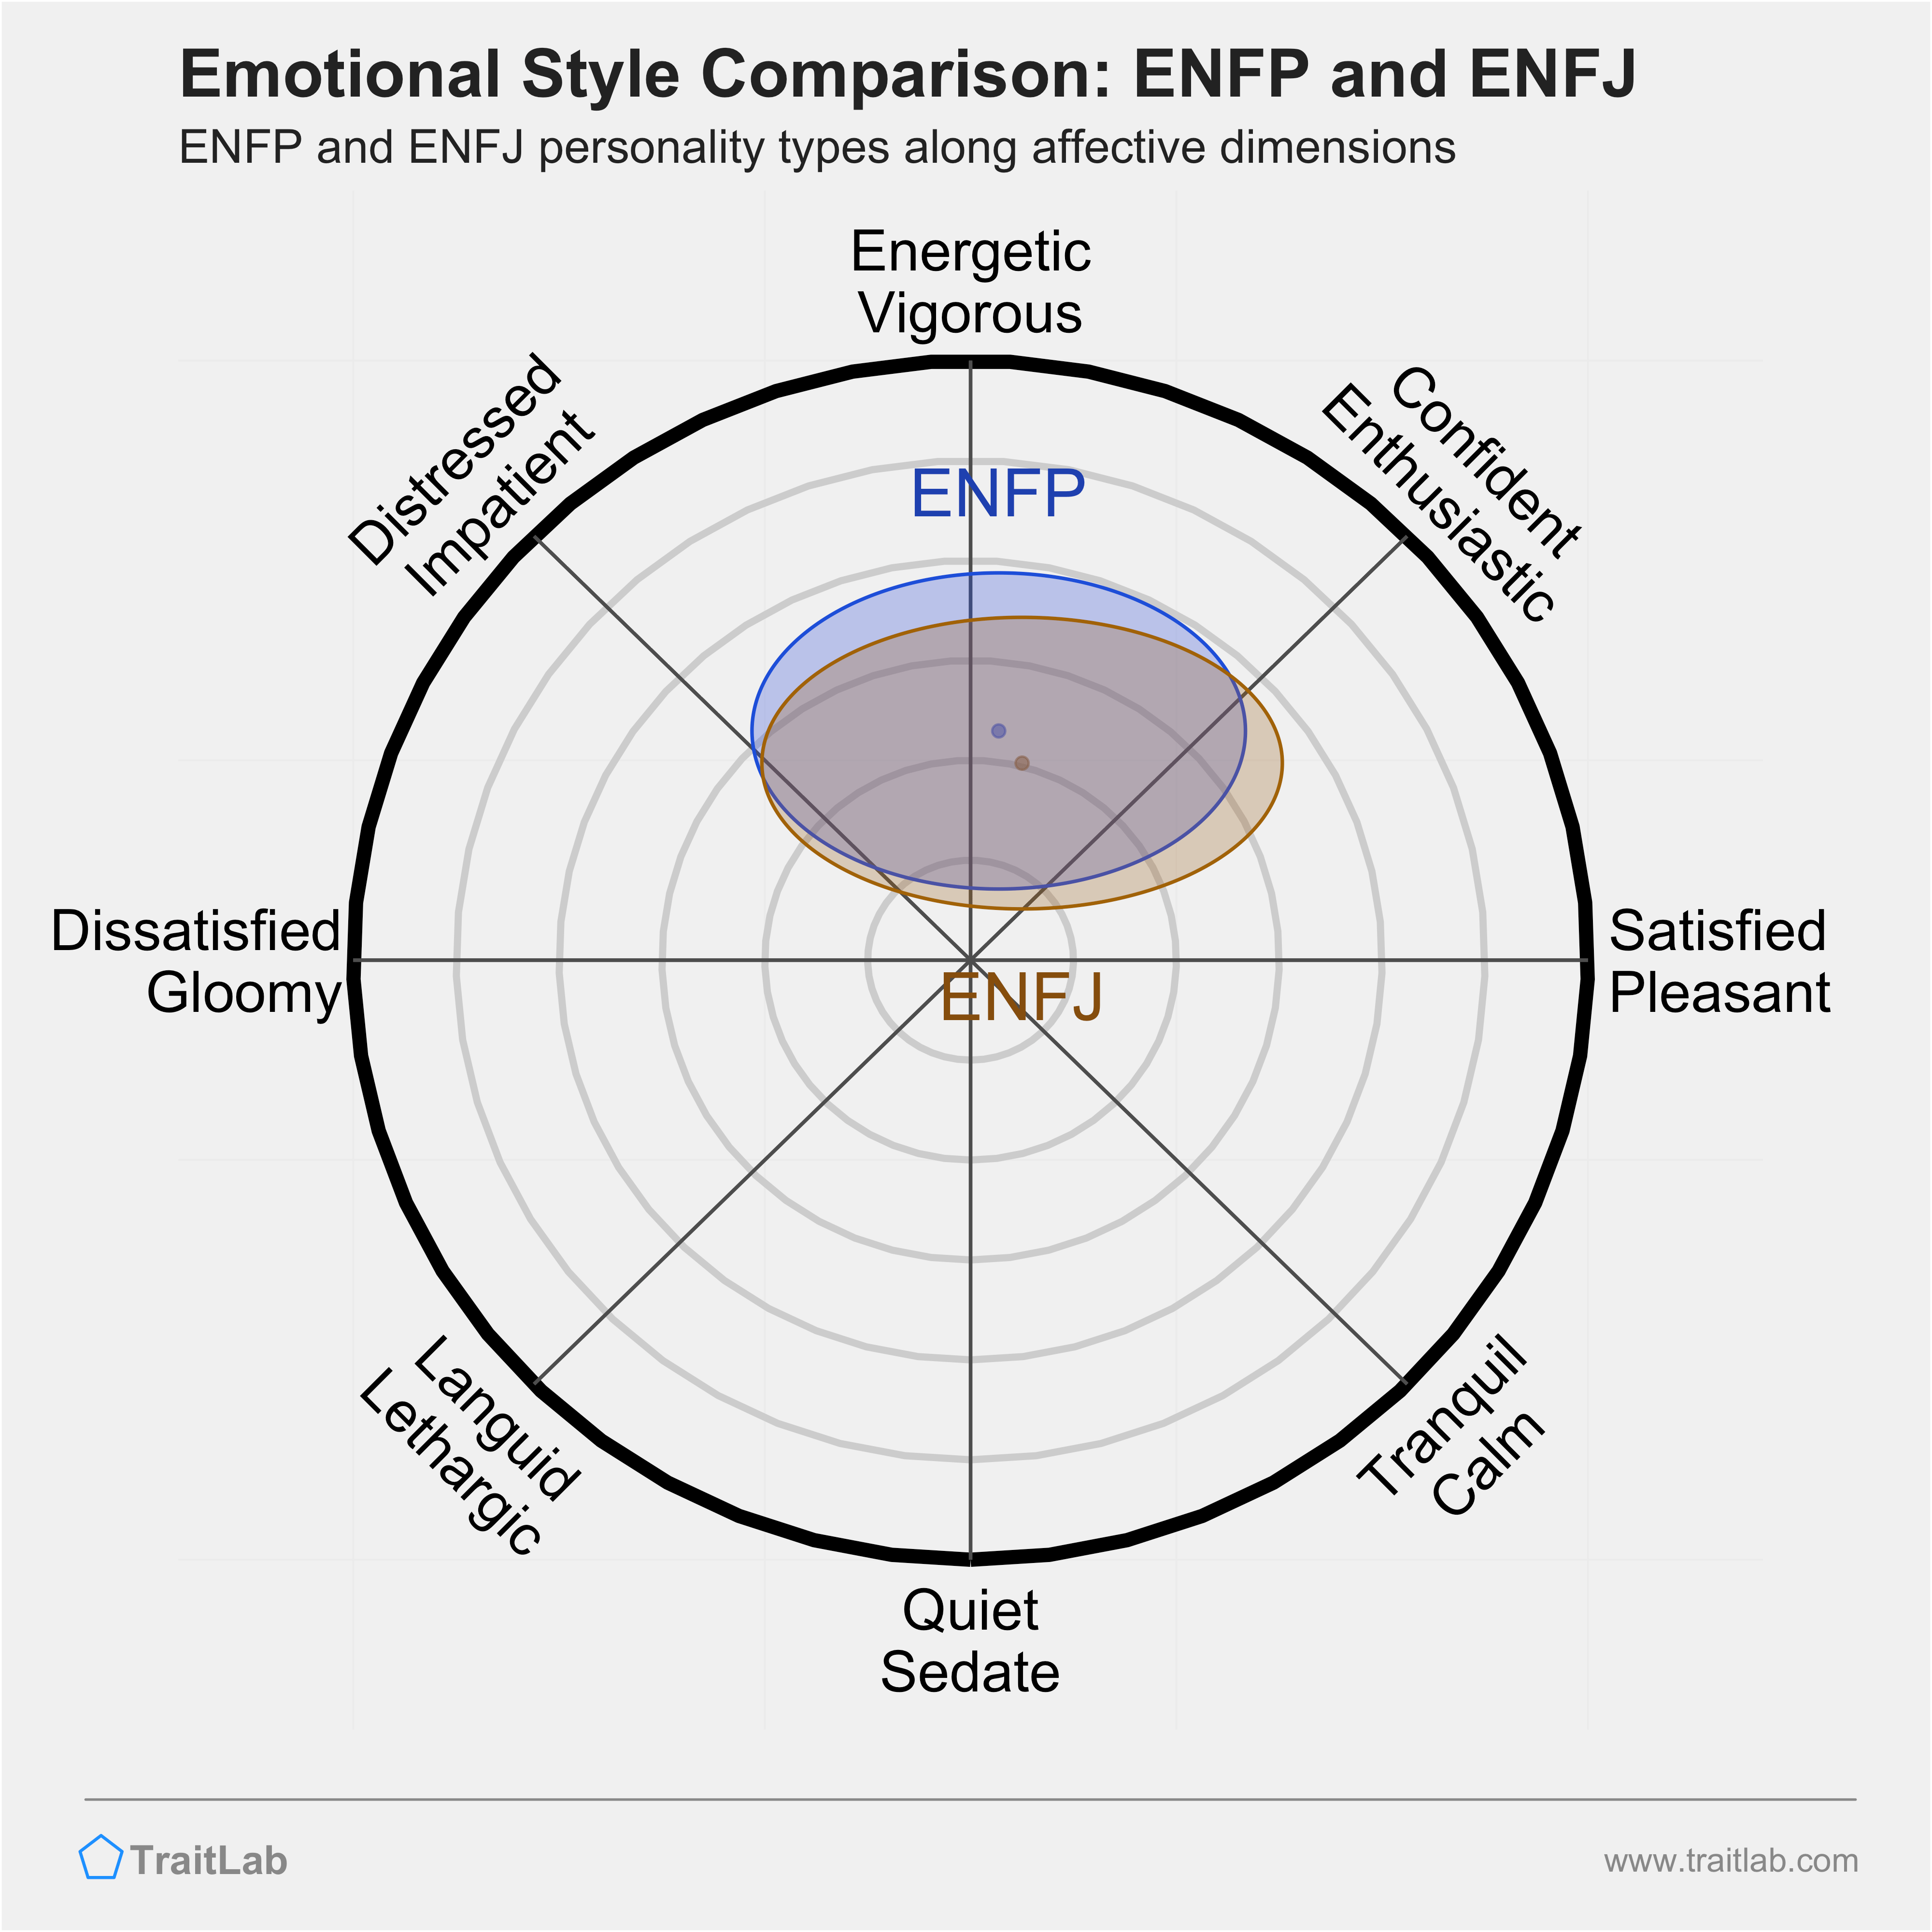 EMI (r) MBTI Personality Type: ENFP or ENFJ?